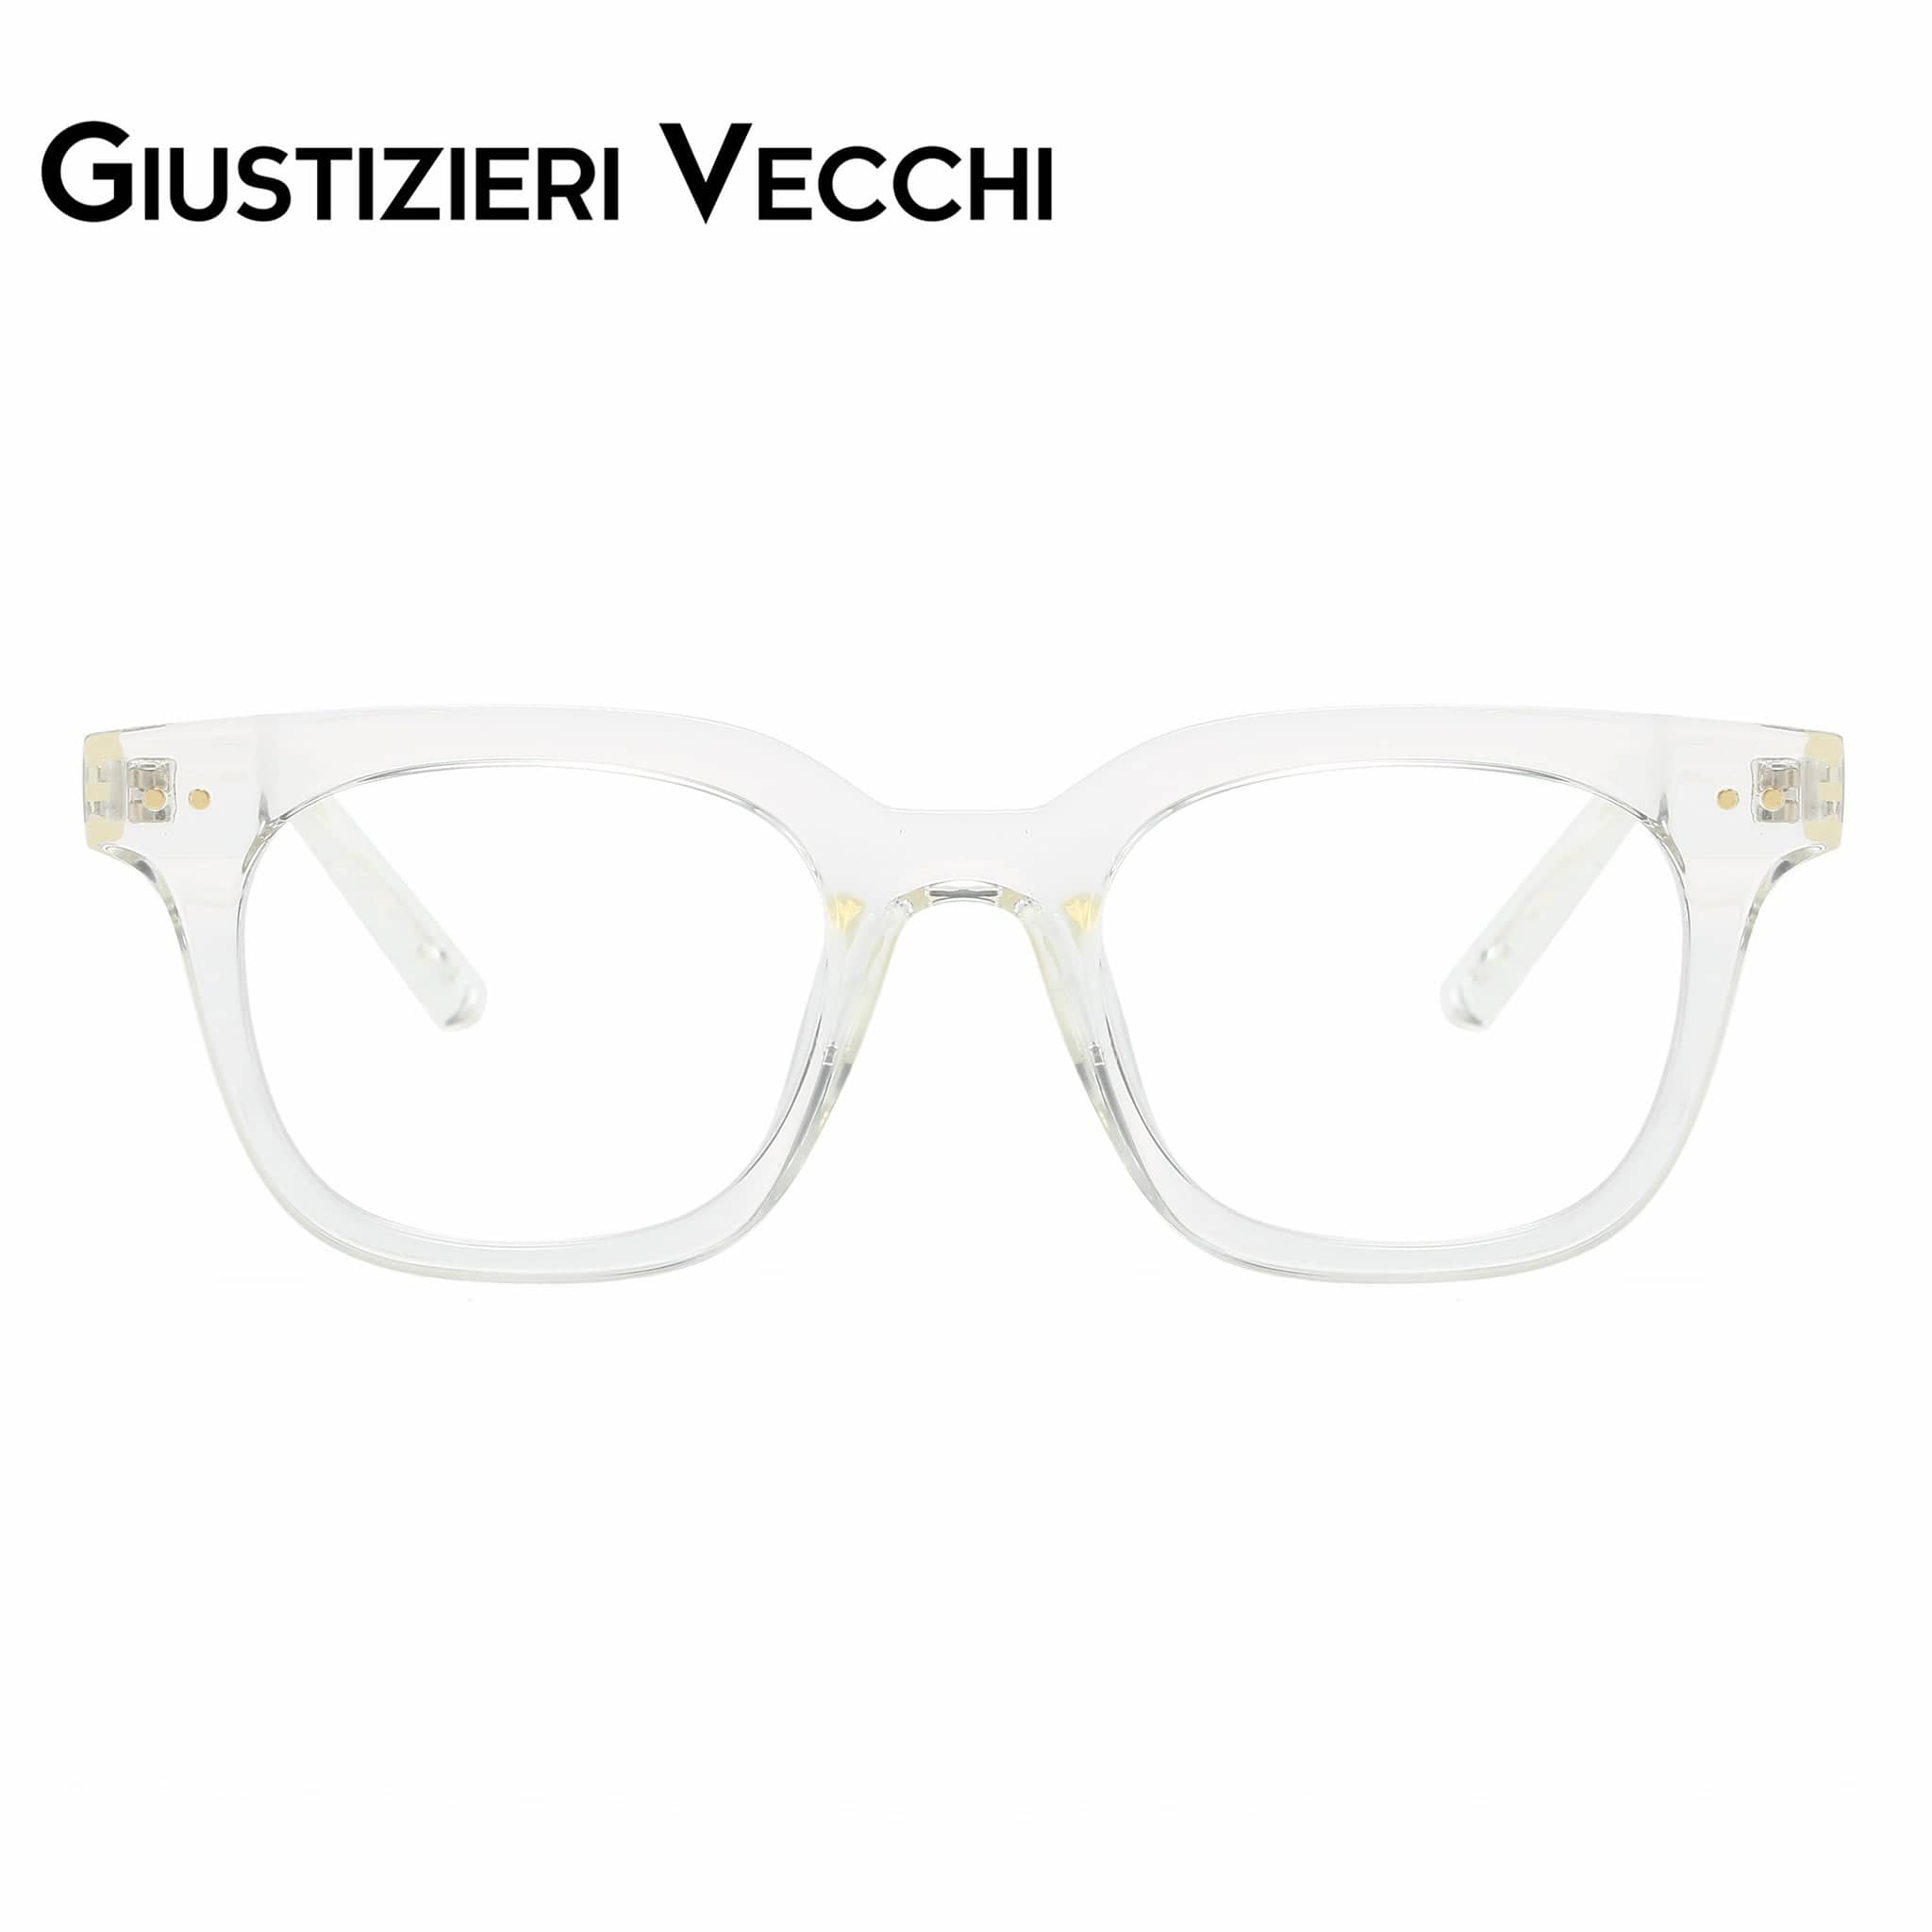 GIUSTIZIERI VECCHI Eyeglasses Small / Clear Crystal Phantom Duo